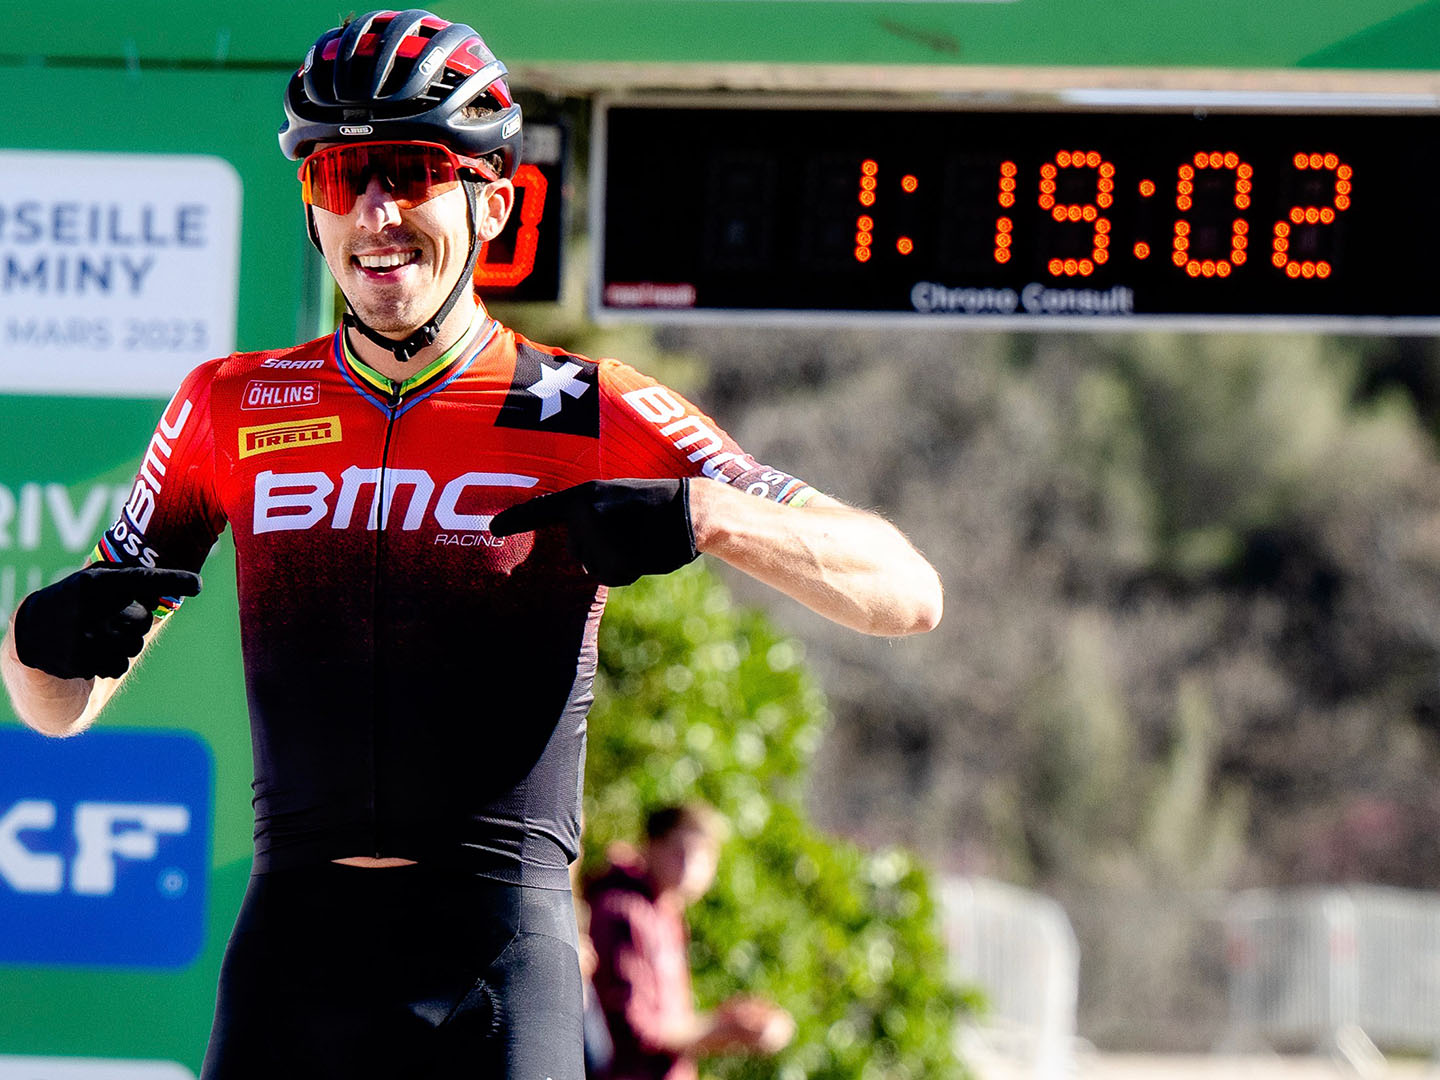 BMC | Jordan Sarrou returns to racing with Team BMC in Chur before World Cups